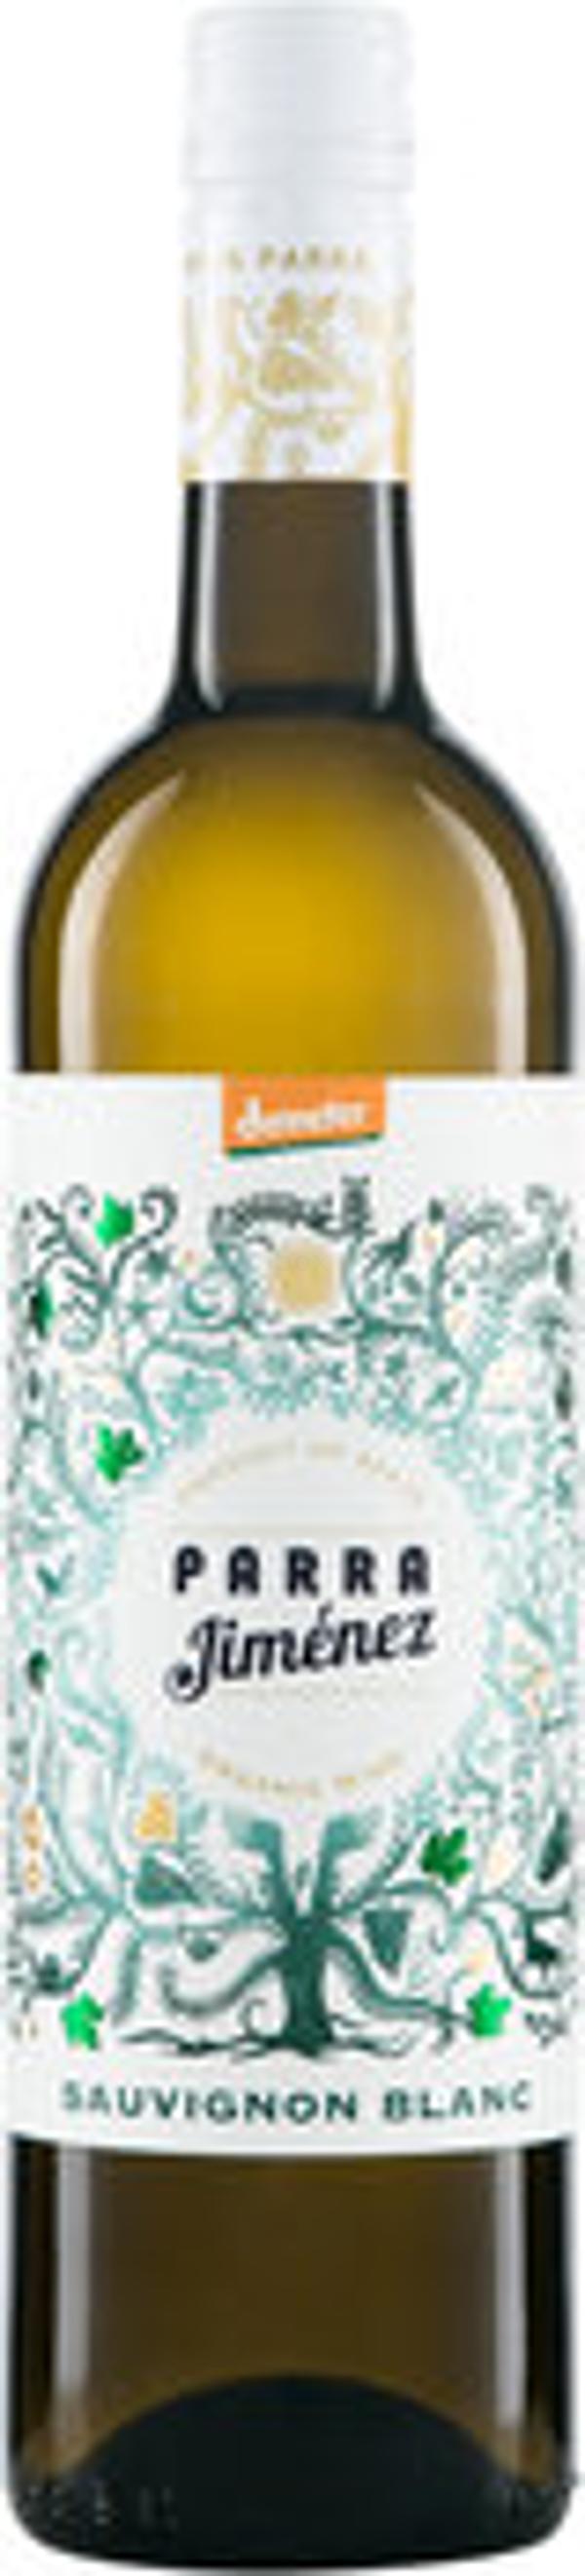 Produktfoto zu Sauvignon Blanc PARRA 2021